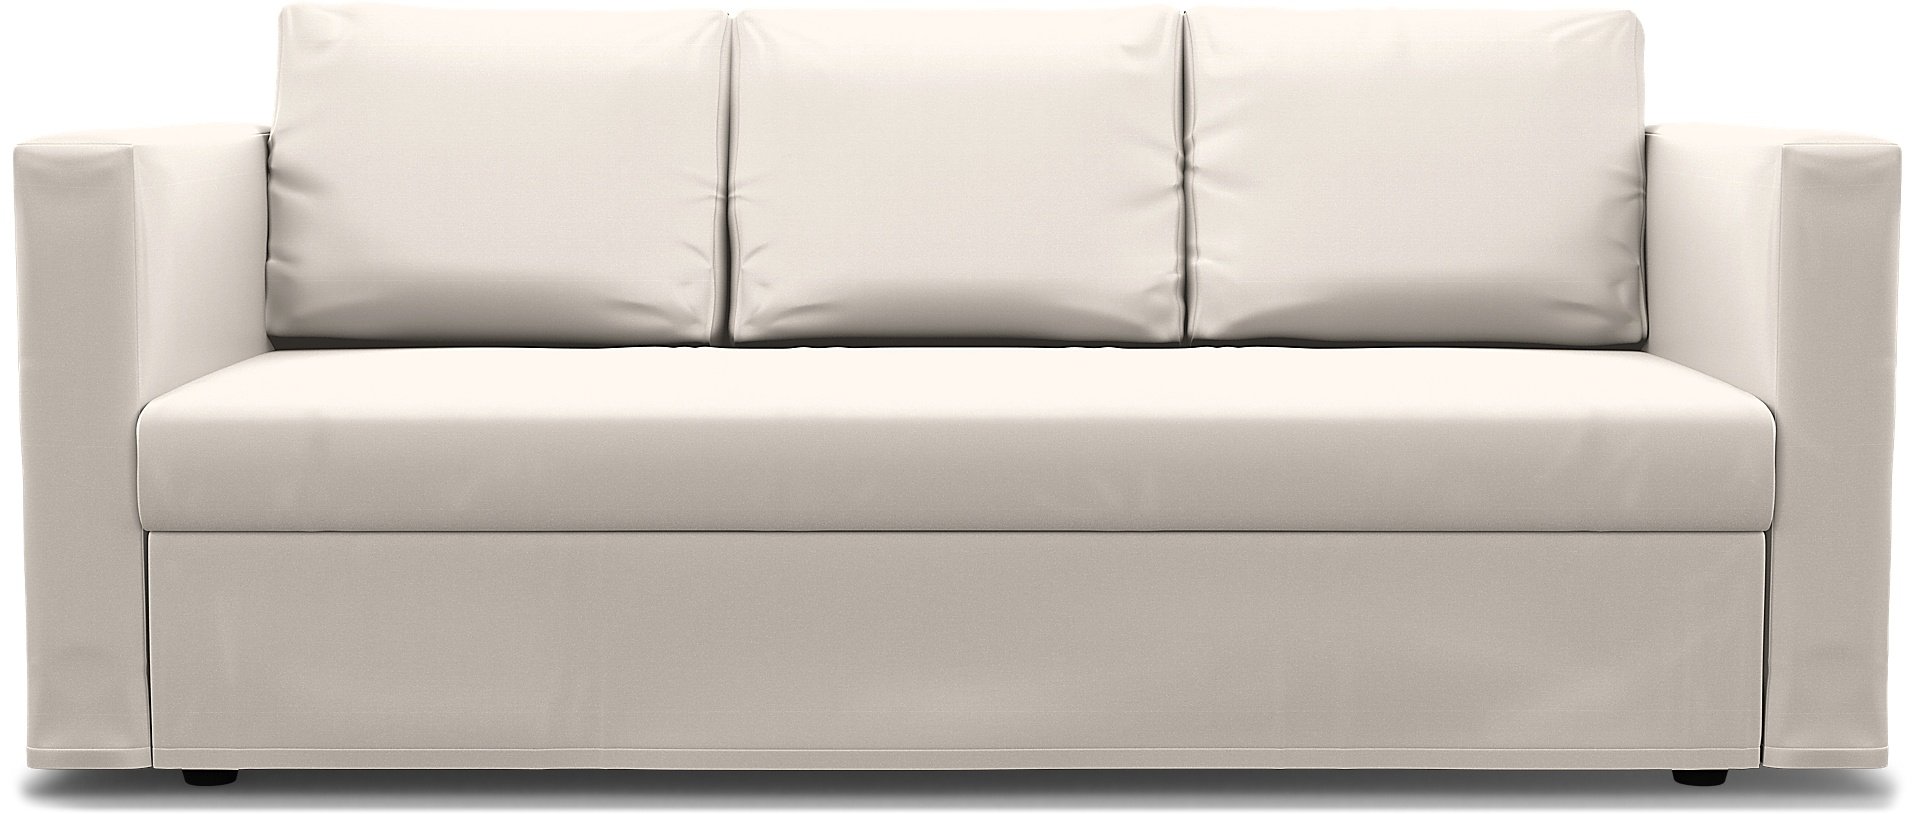 IKEA - Friheten 3 Seater Sofa Bed Cover, Soft White, Cotton - Bemz